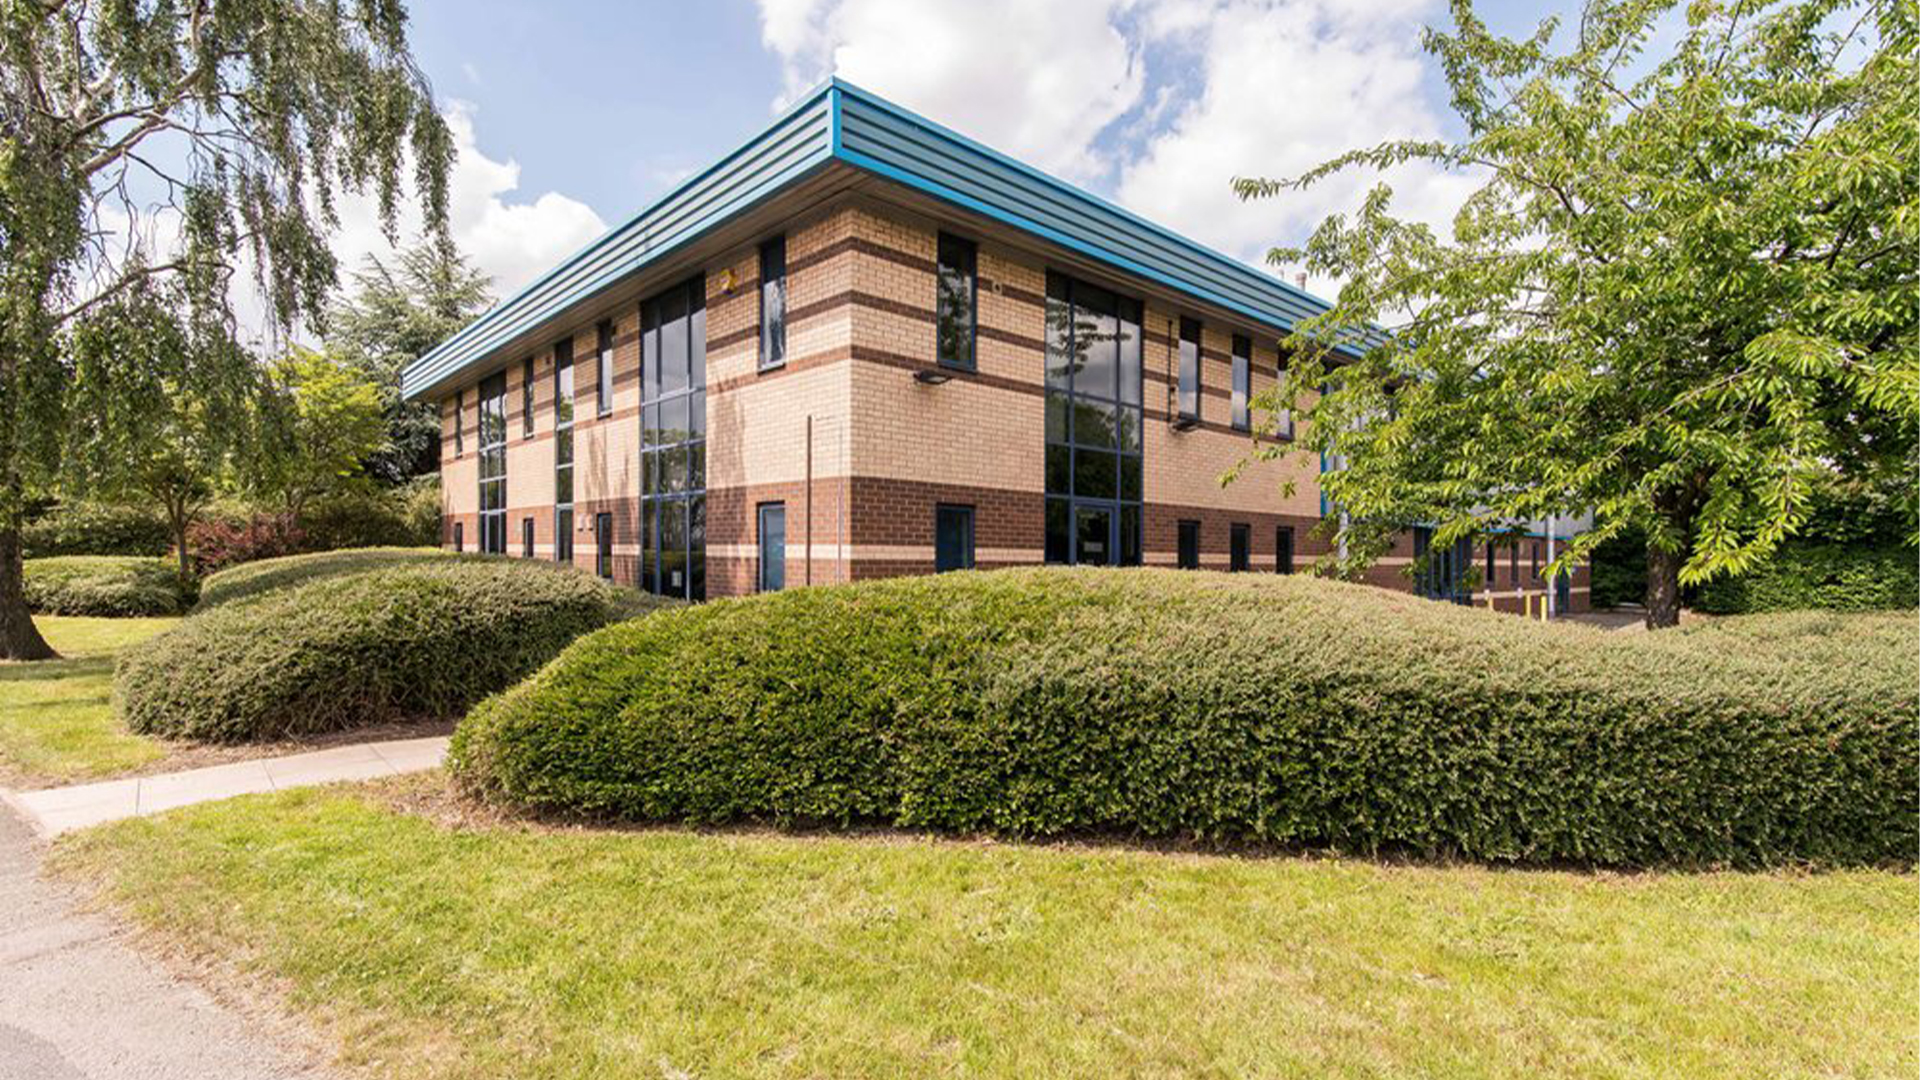 CWCS reveals plans for new Nottingham data center